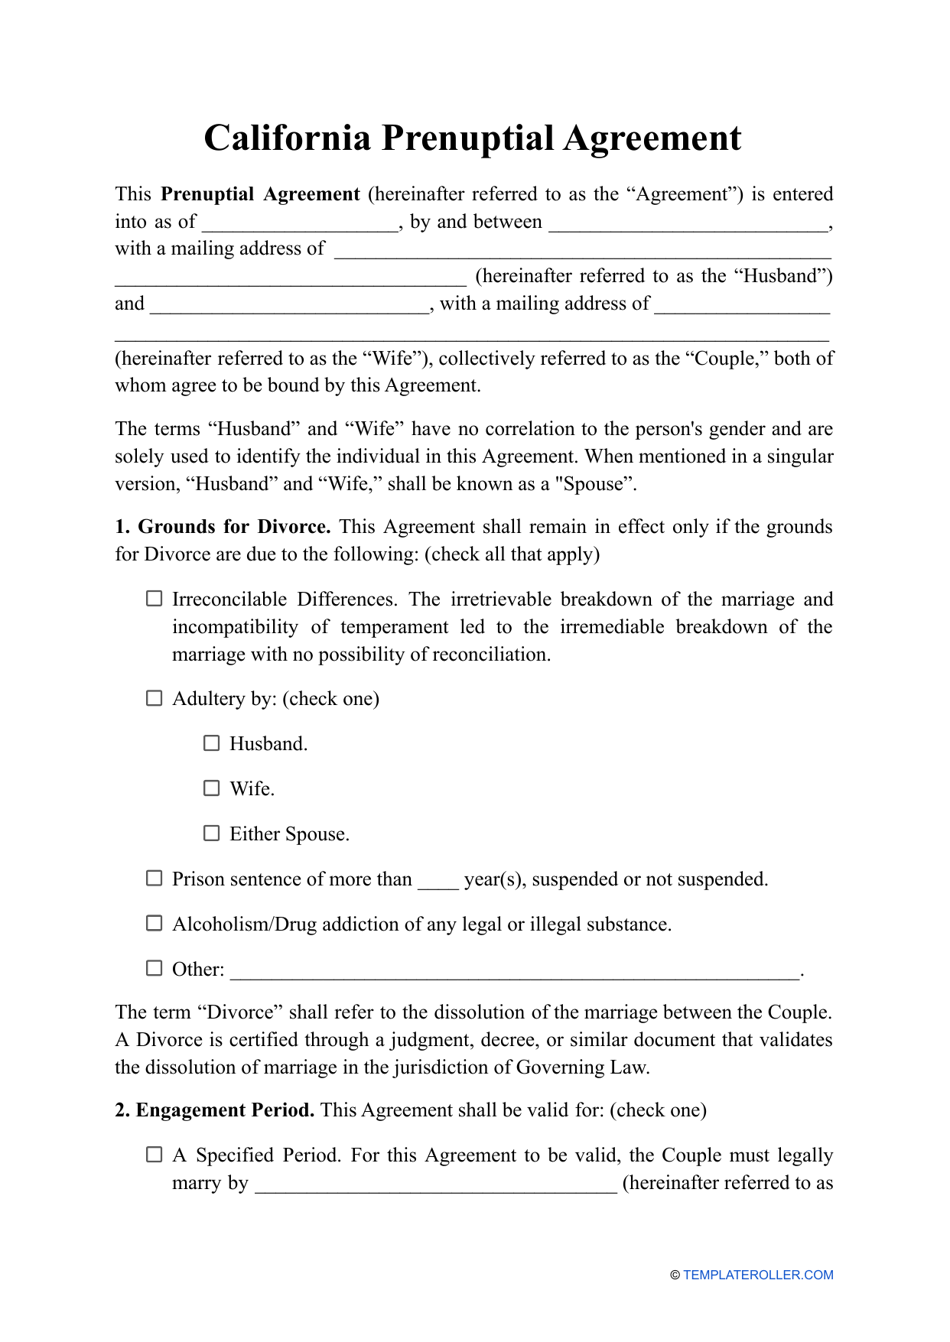 Prenuptial Agreement Template - California, Page 1